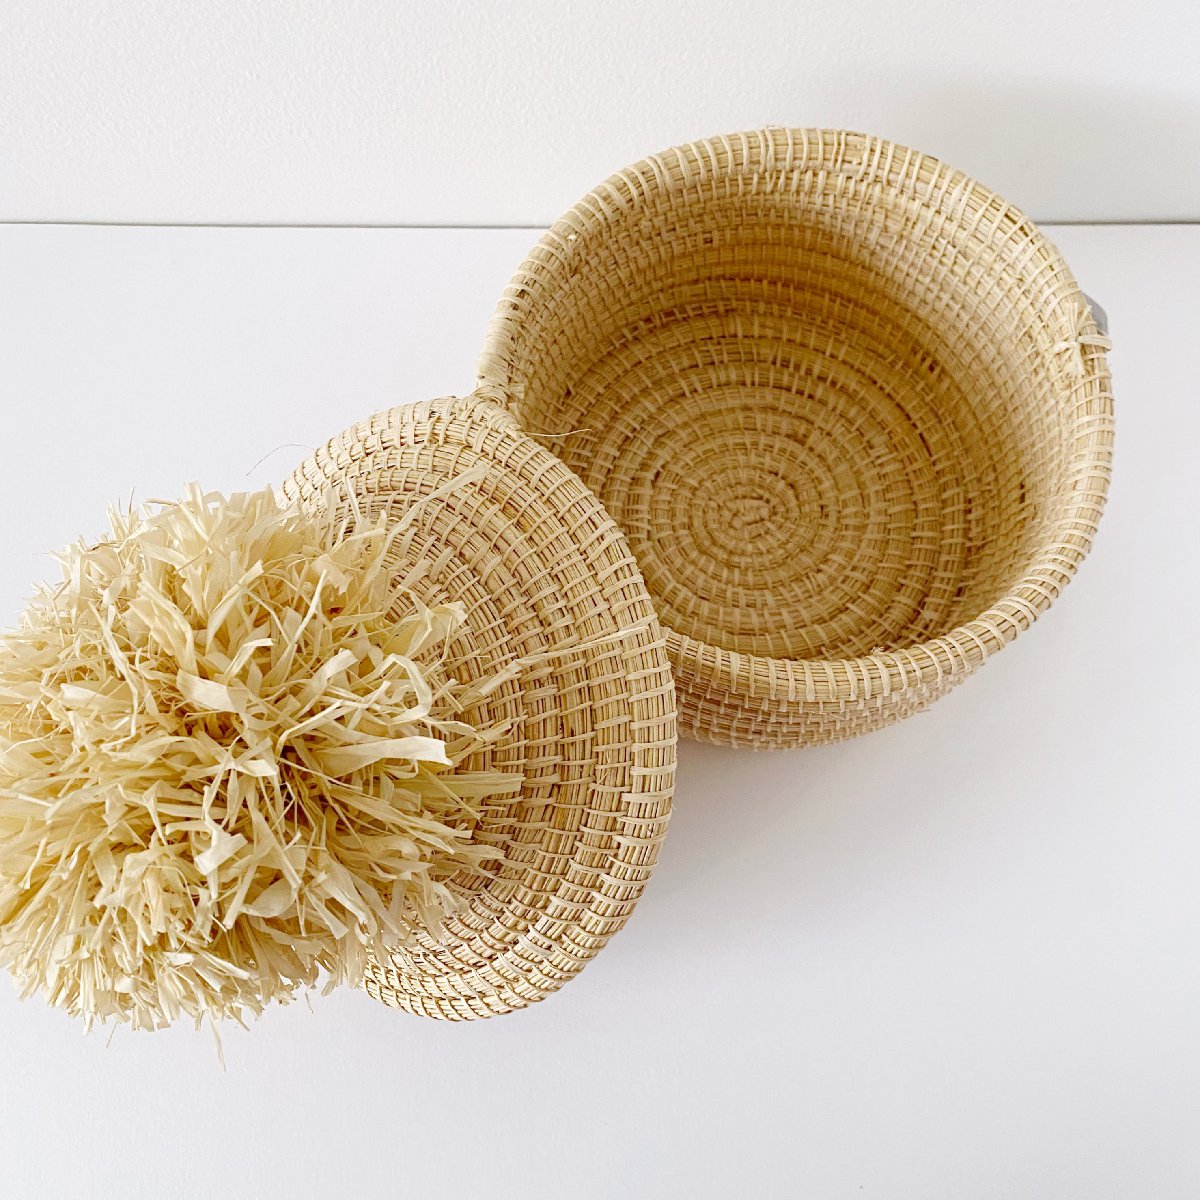 African woven pom pom lidded basket | natural #3 - open